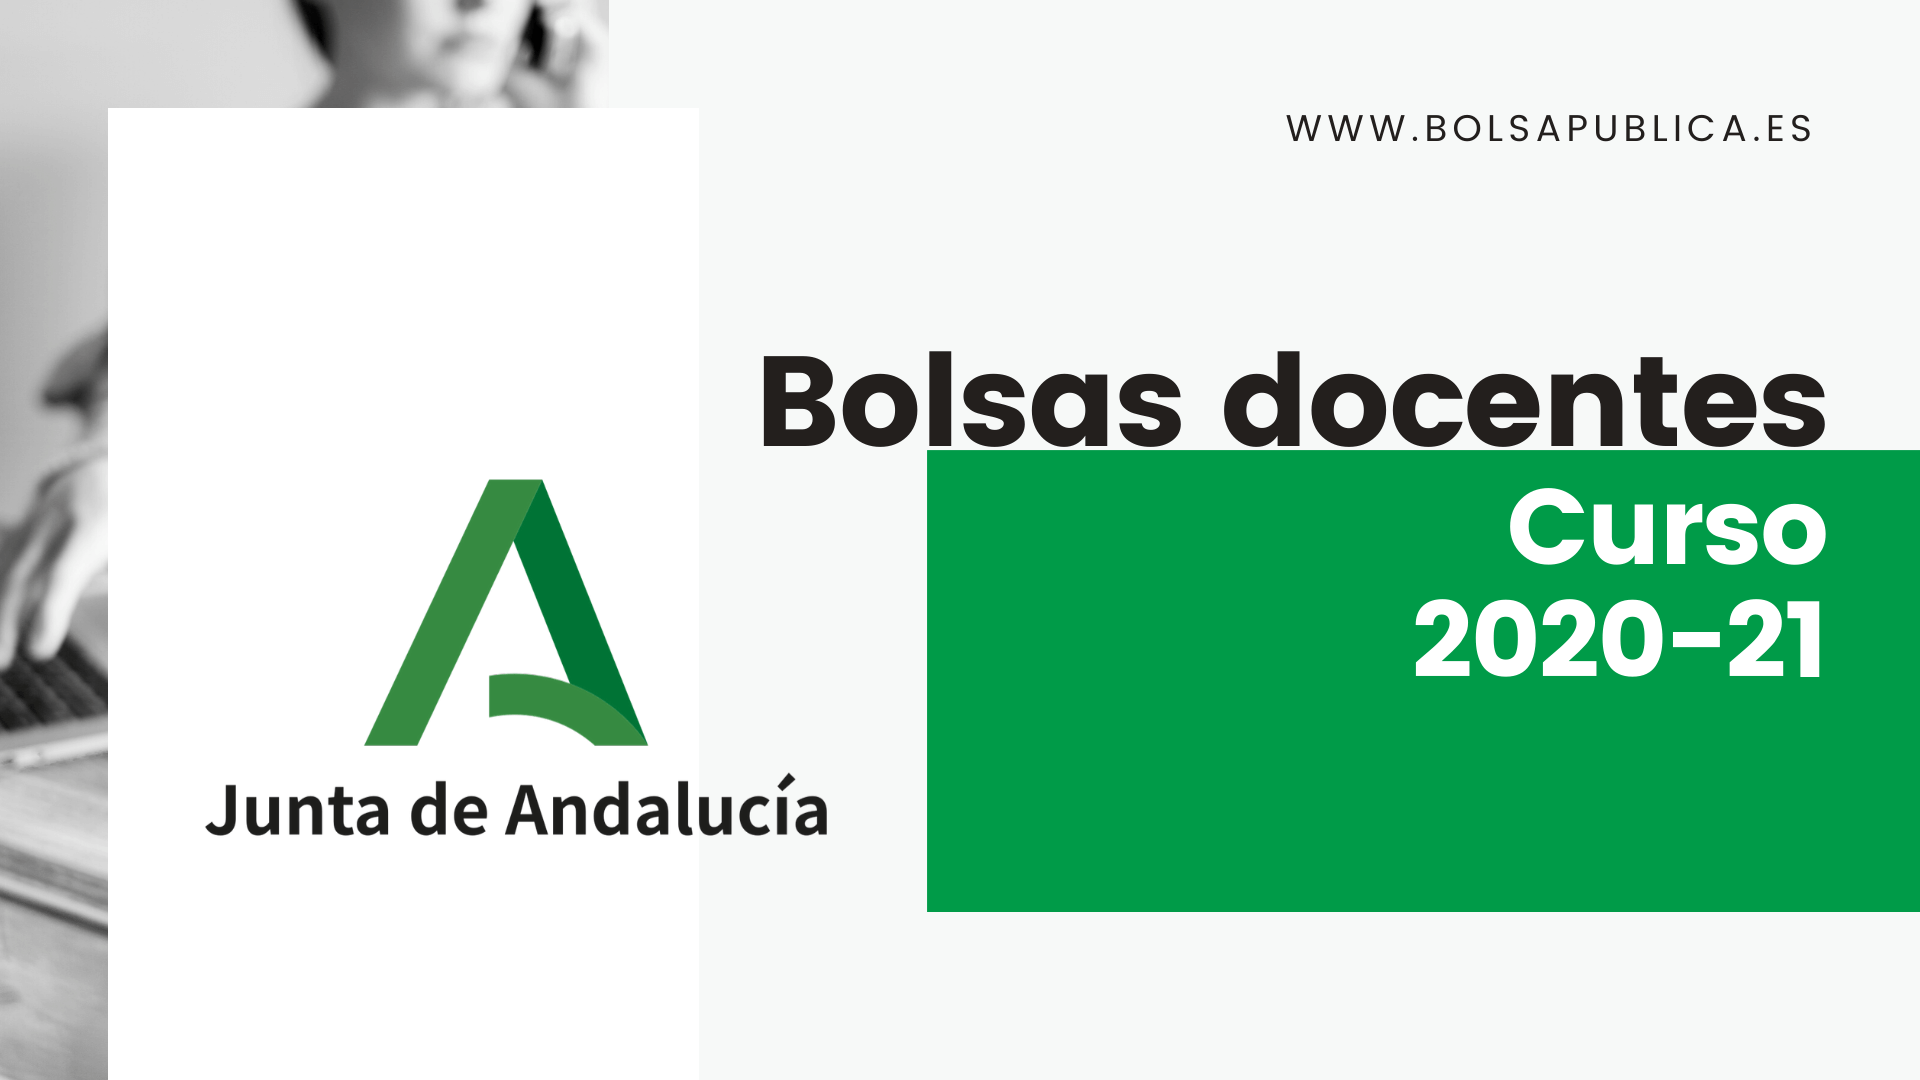 Bolsas docentes en Andalucía. 2020-21 - Bolsapublica.es